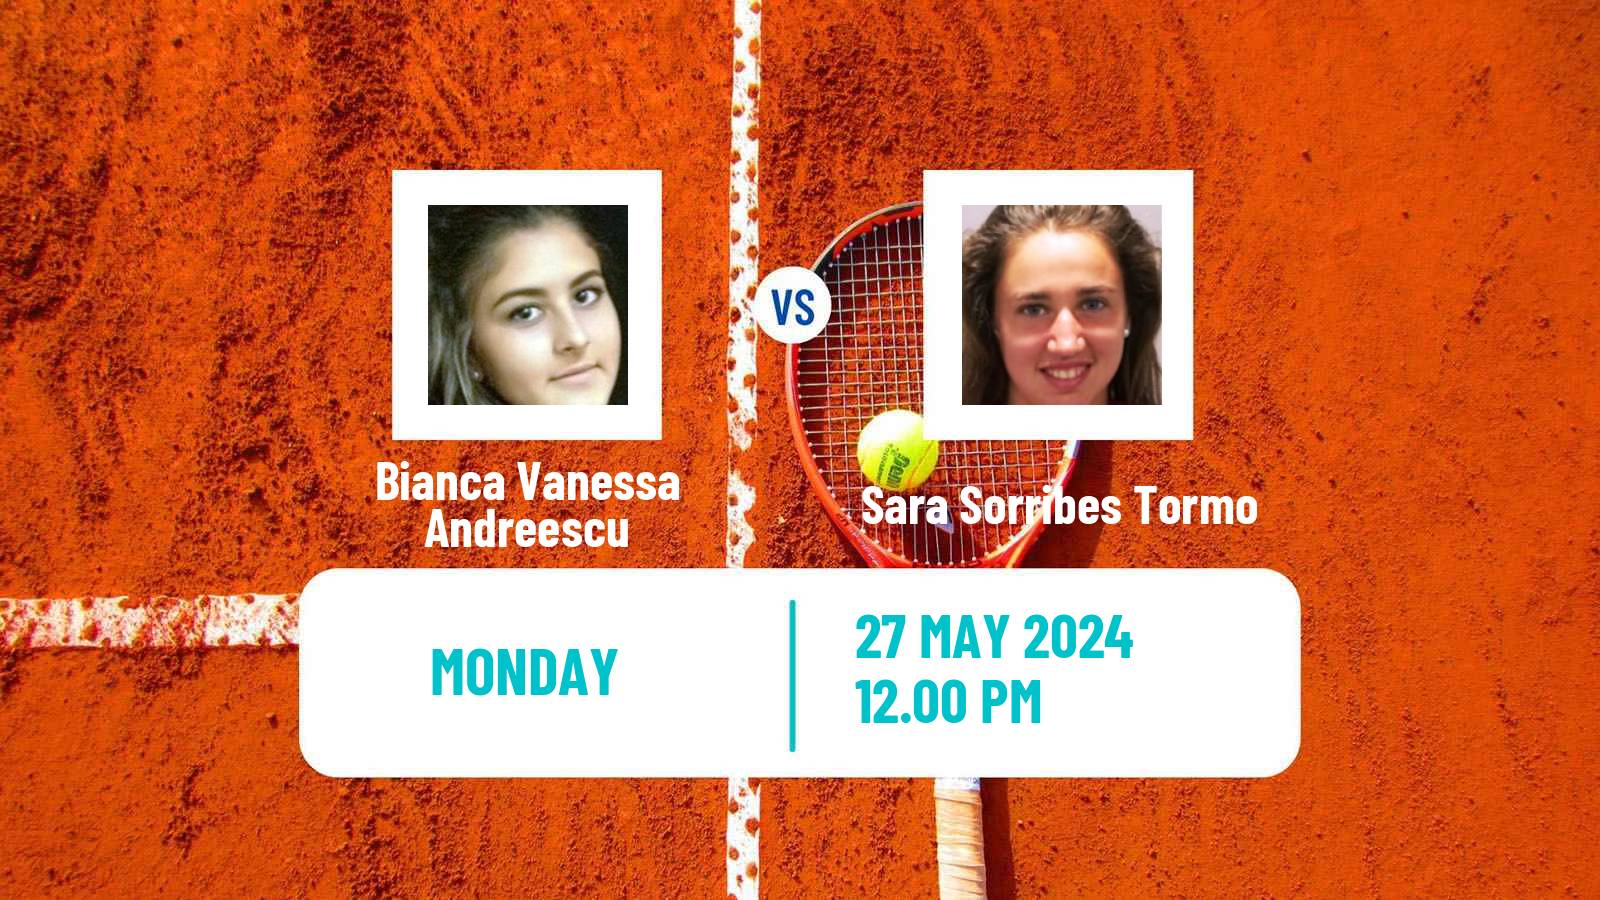 Tennis WTA Roland Garros Bianca Vanessa Andreescu - Sara Sorribes Tormo